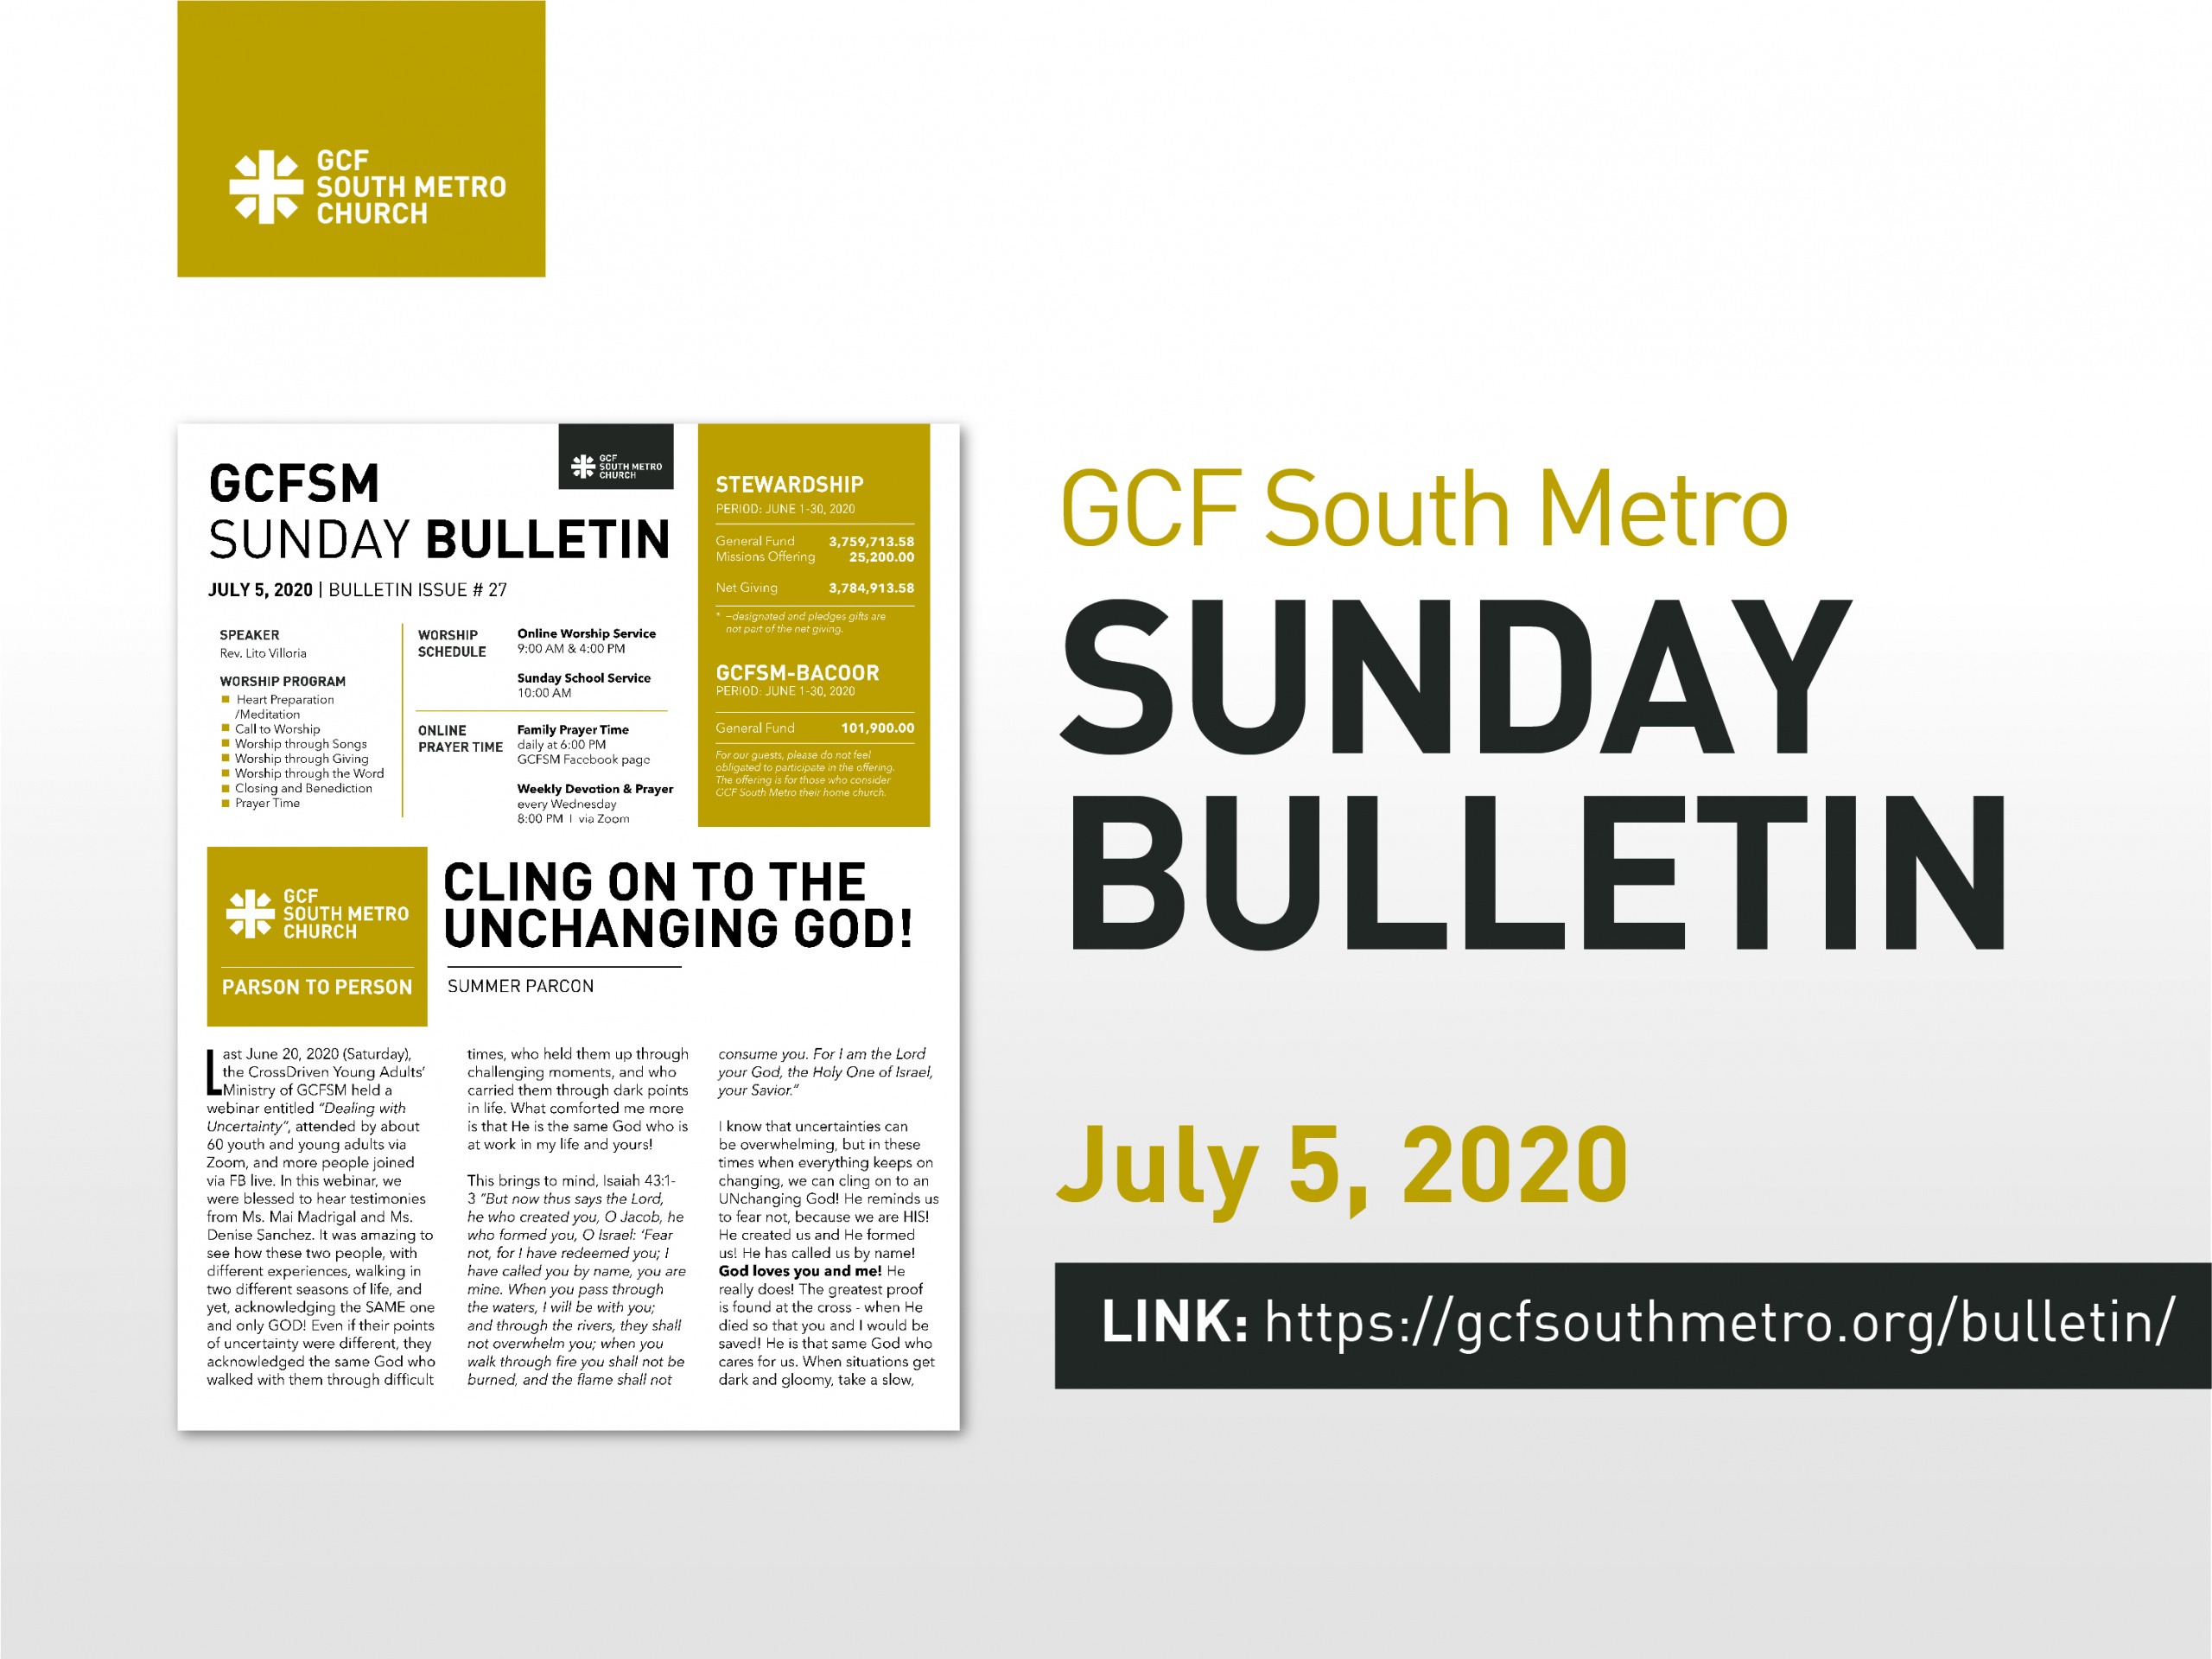 Sunday Bulletin, July 5, 2020